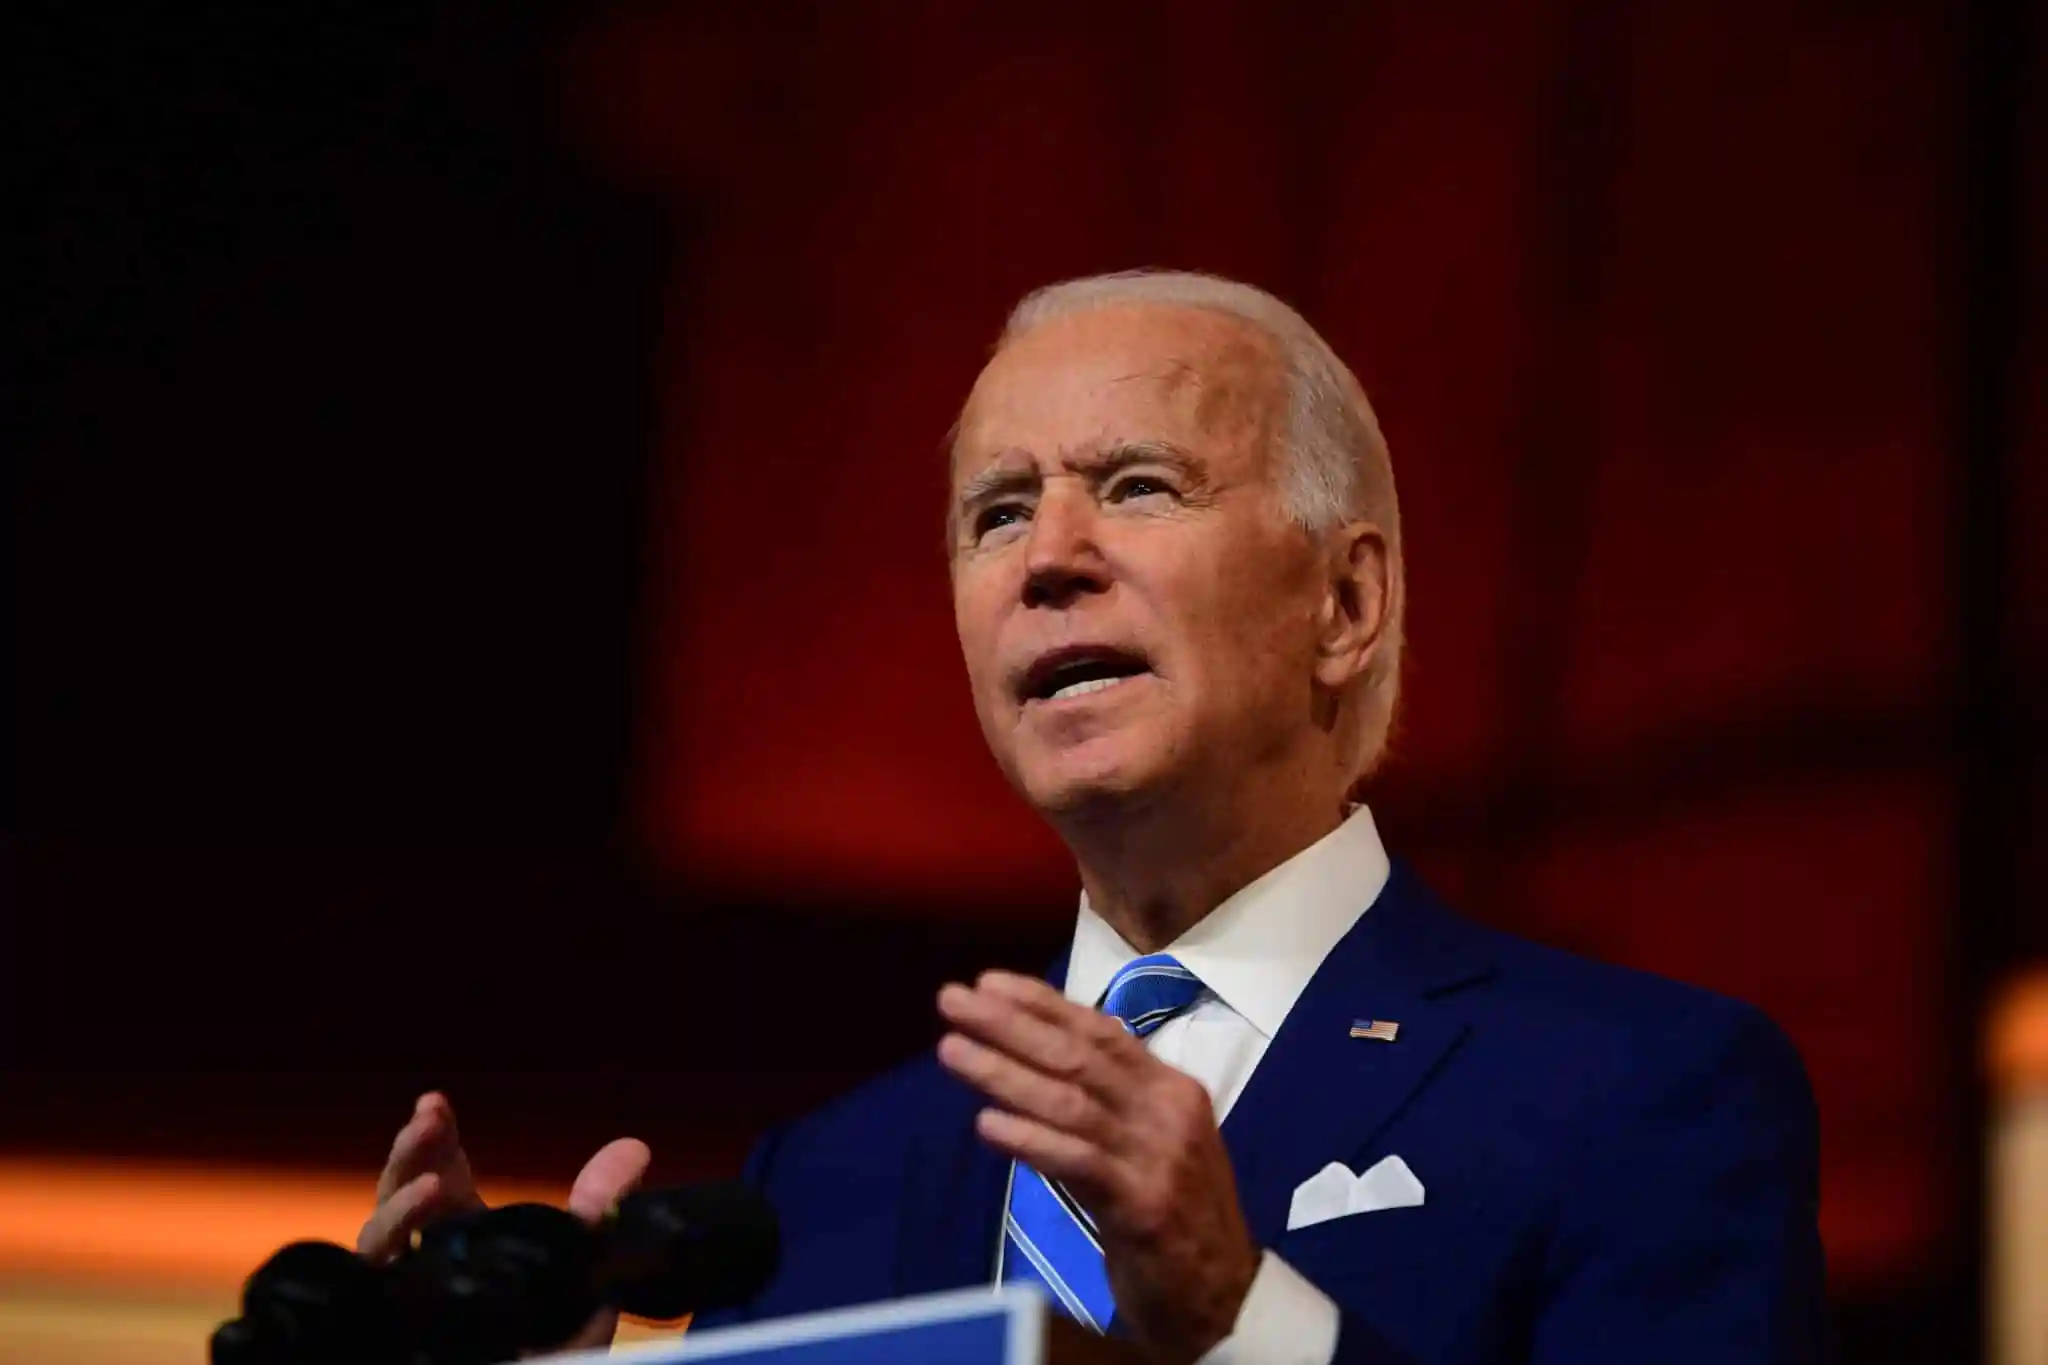 President-elect Joe Biden will seek to reverse Trump's anti-LGBT agenda